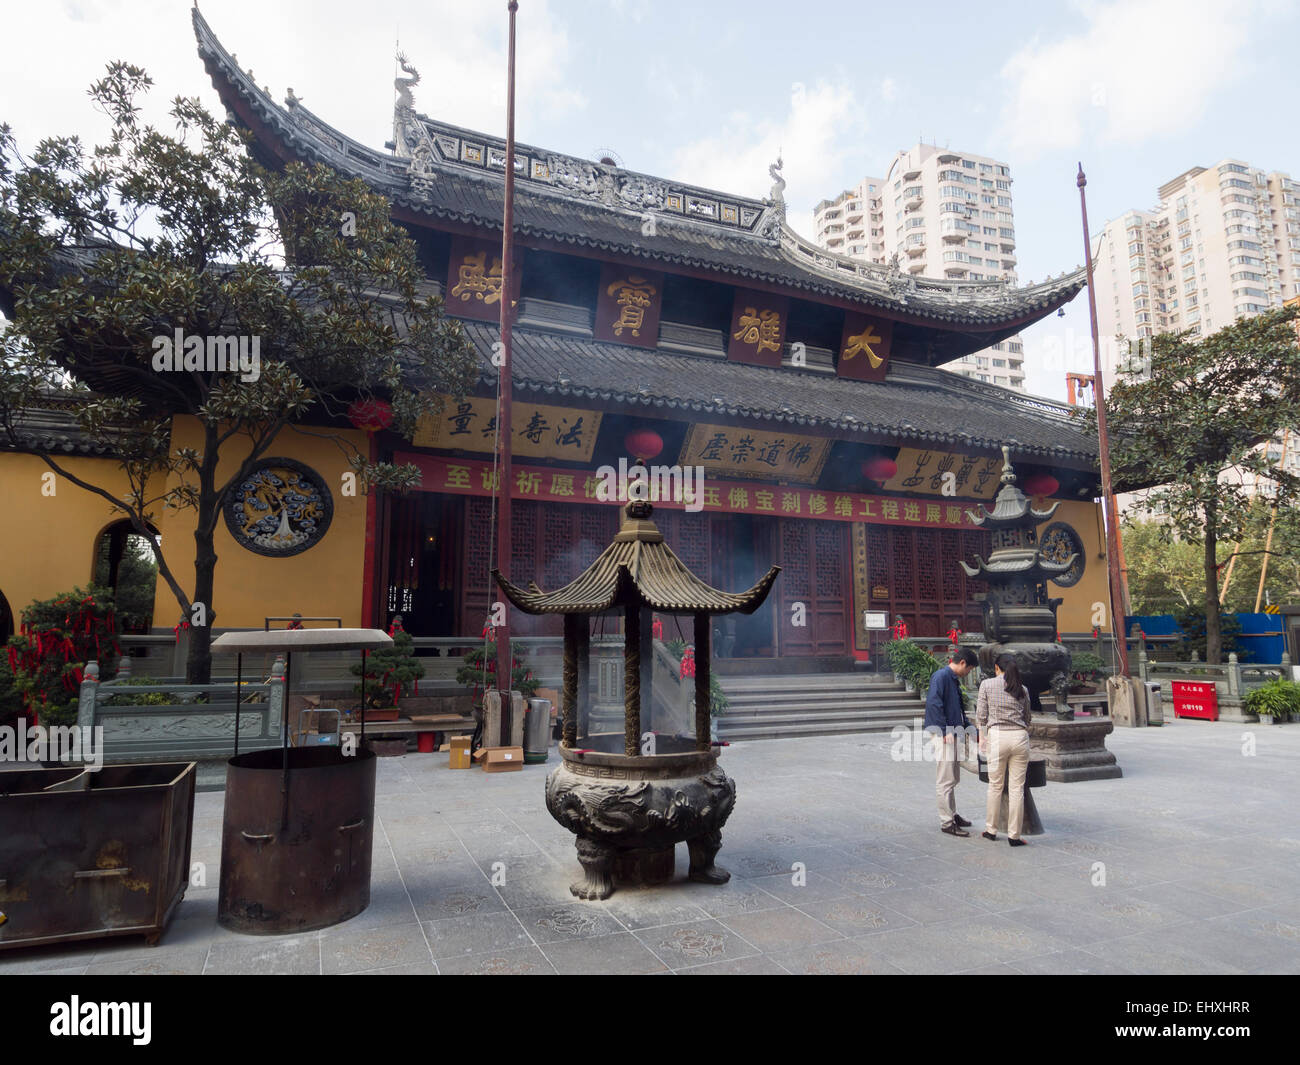 Courtyard of the Jade Buddha temple in Shanghai, China Stock Photo